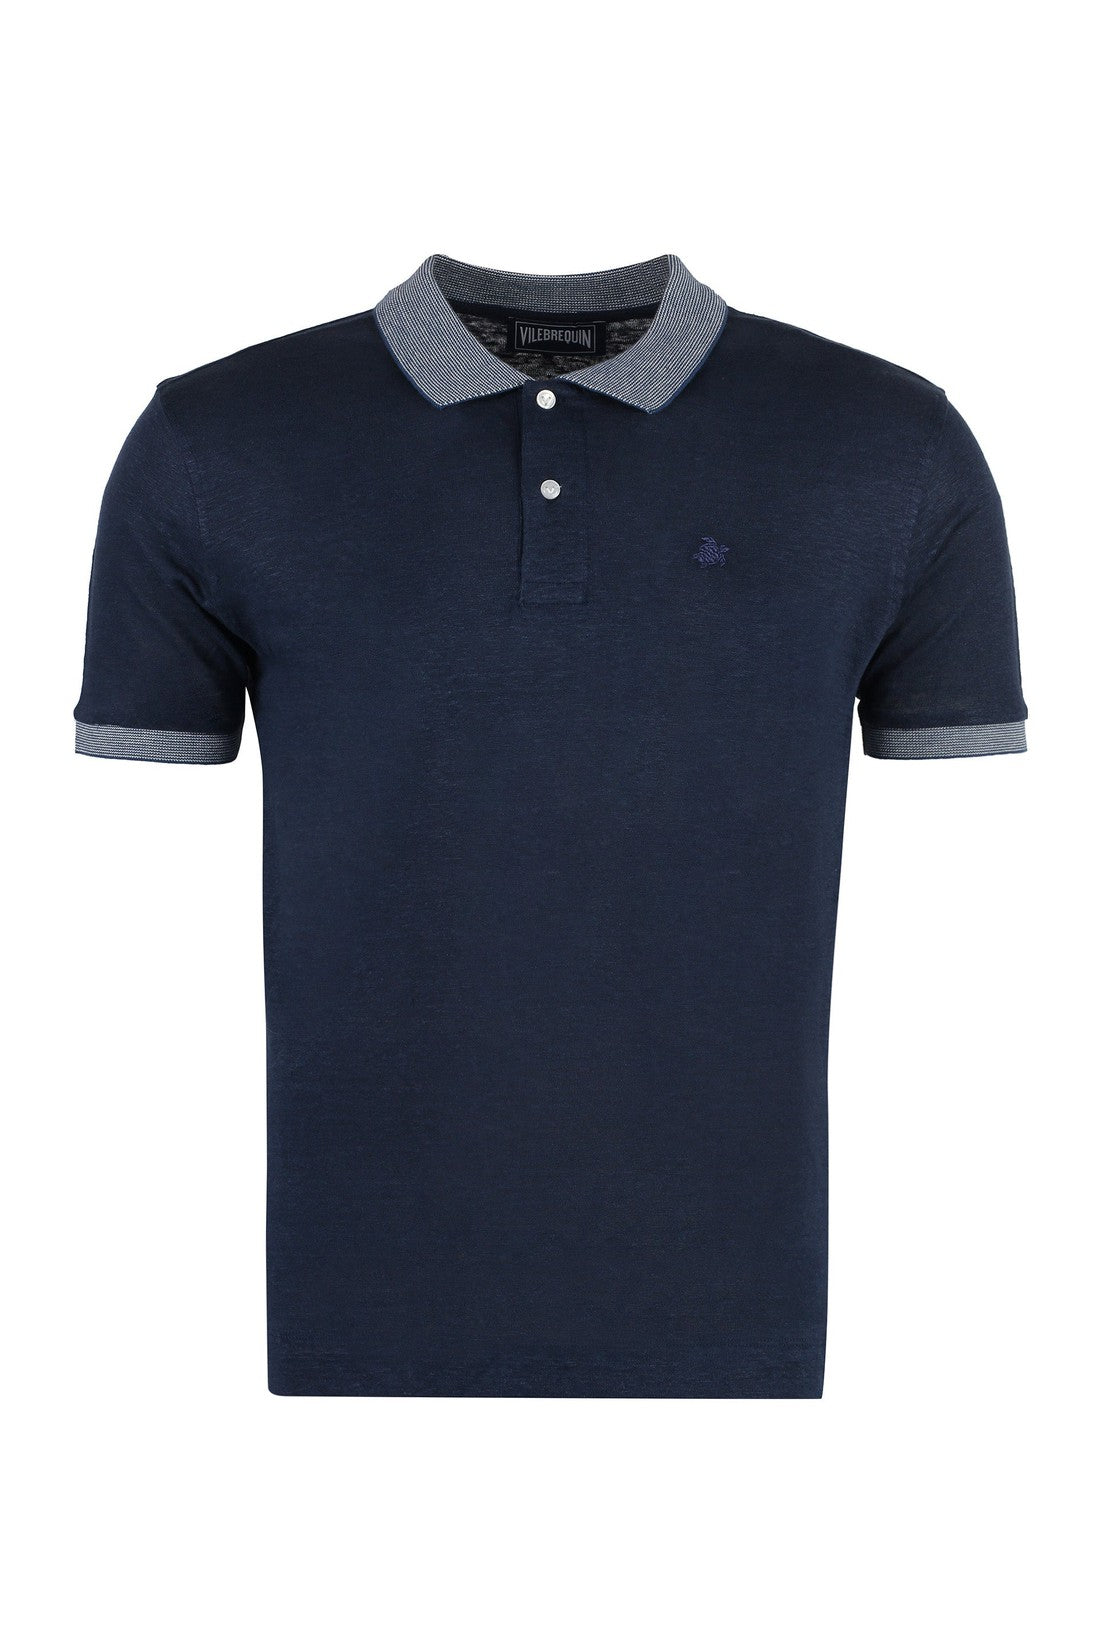 Vilebrequin-OUTLET-SALE-Short sleeve polo shirt-ARCHIVIST